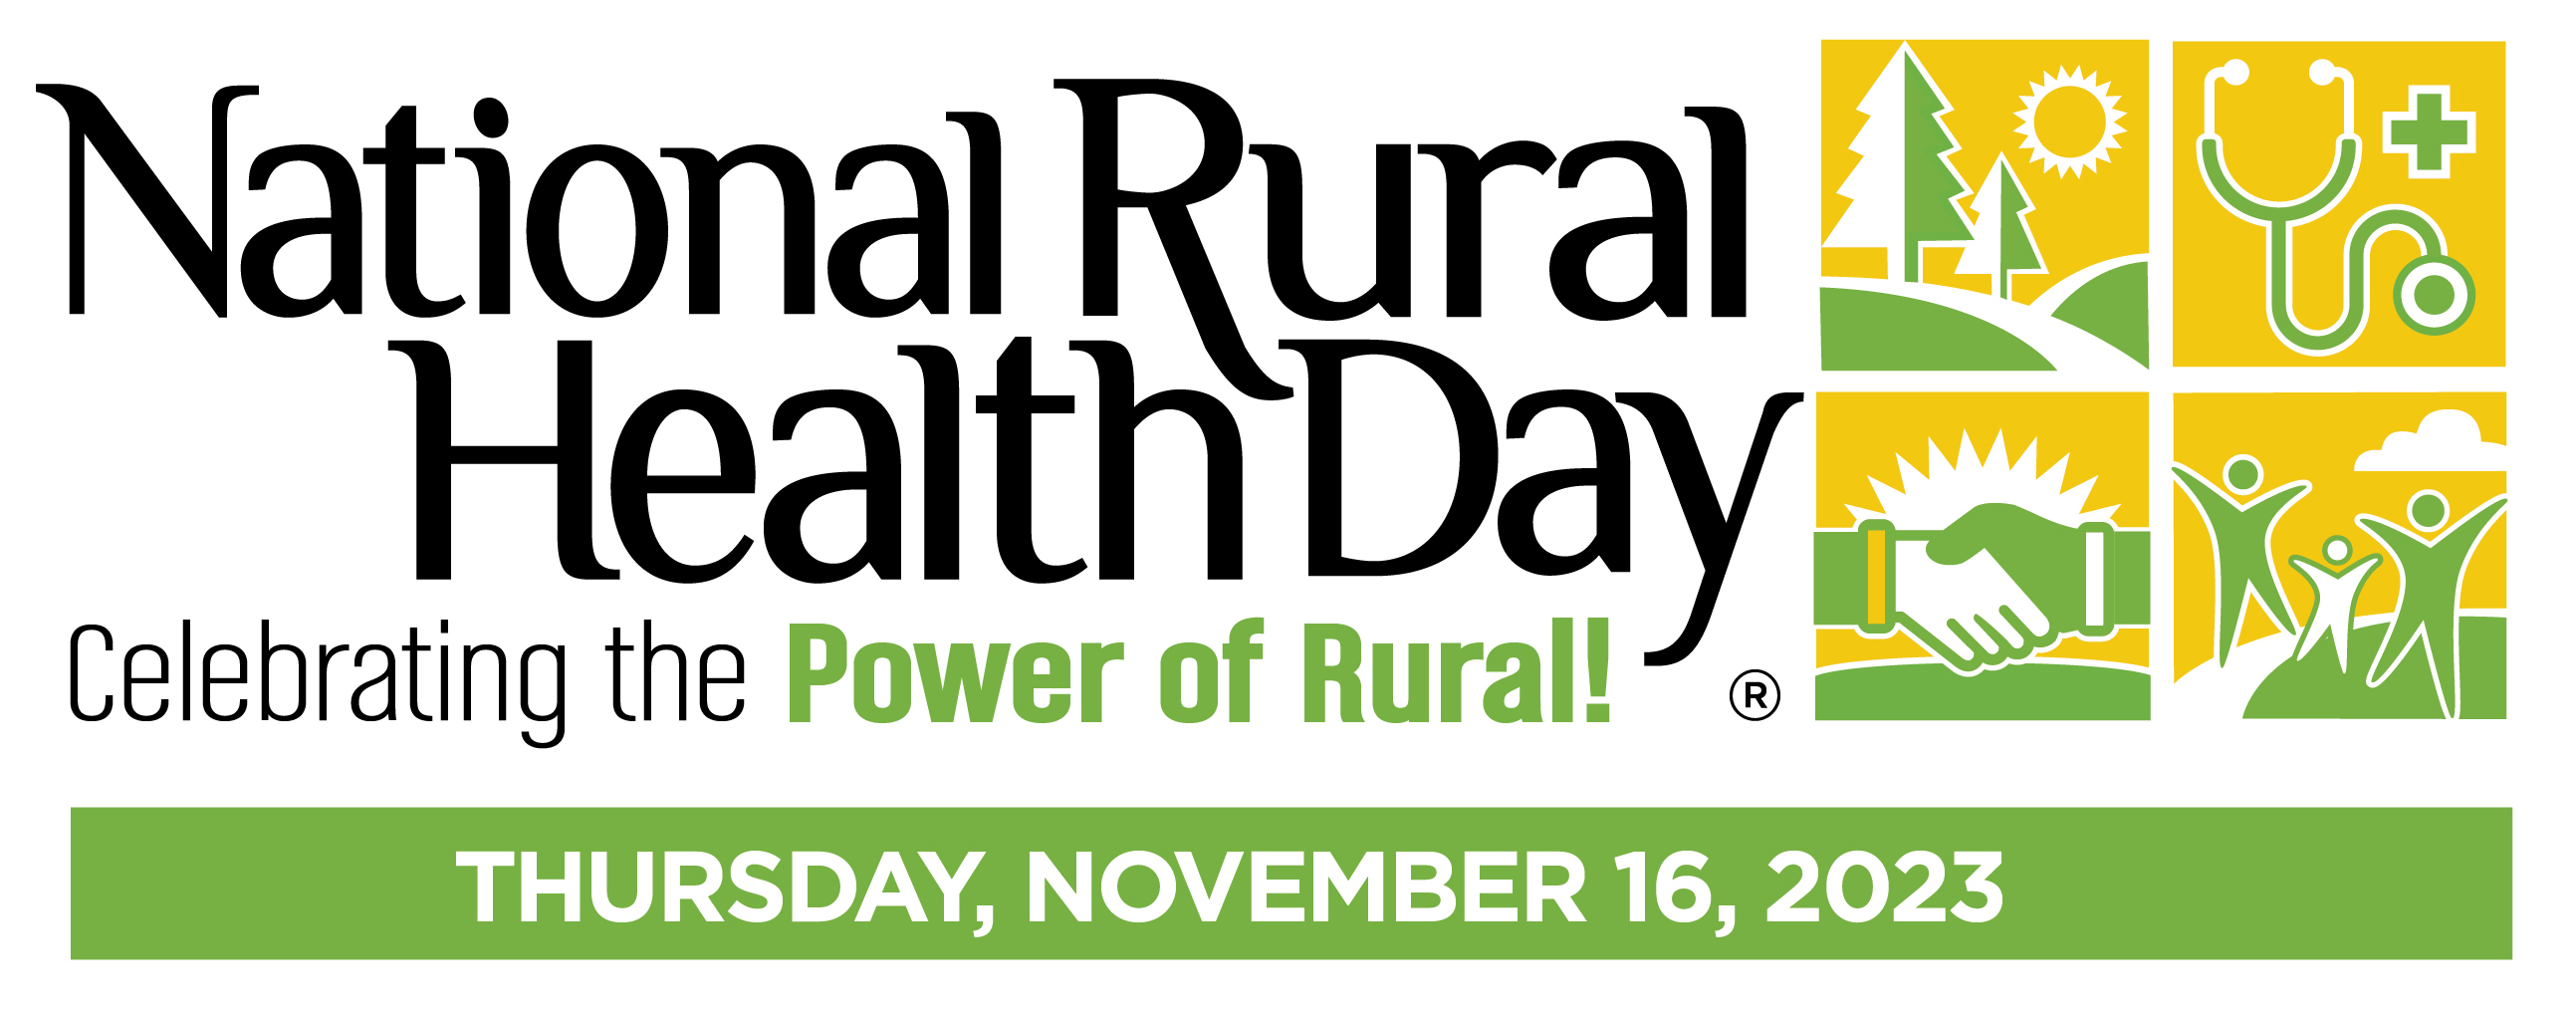 National Rural Health Day 2023 Banner